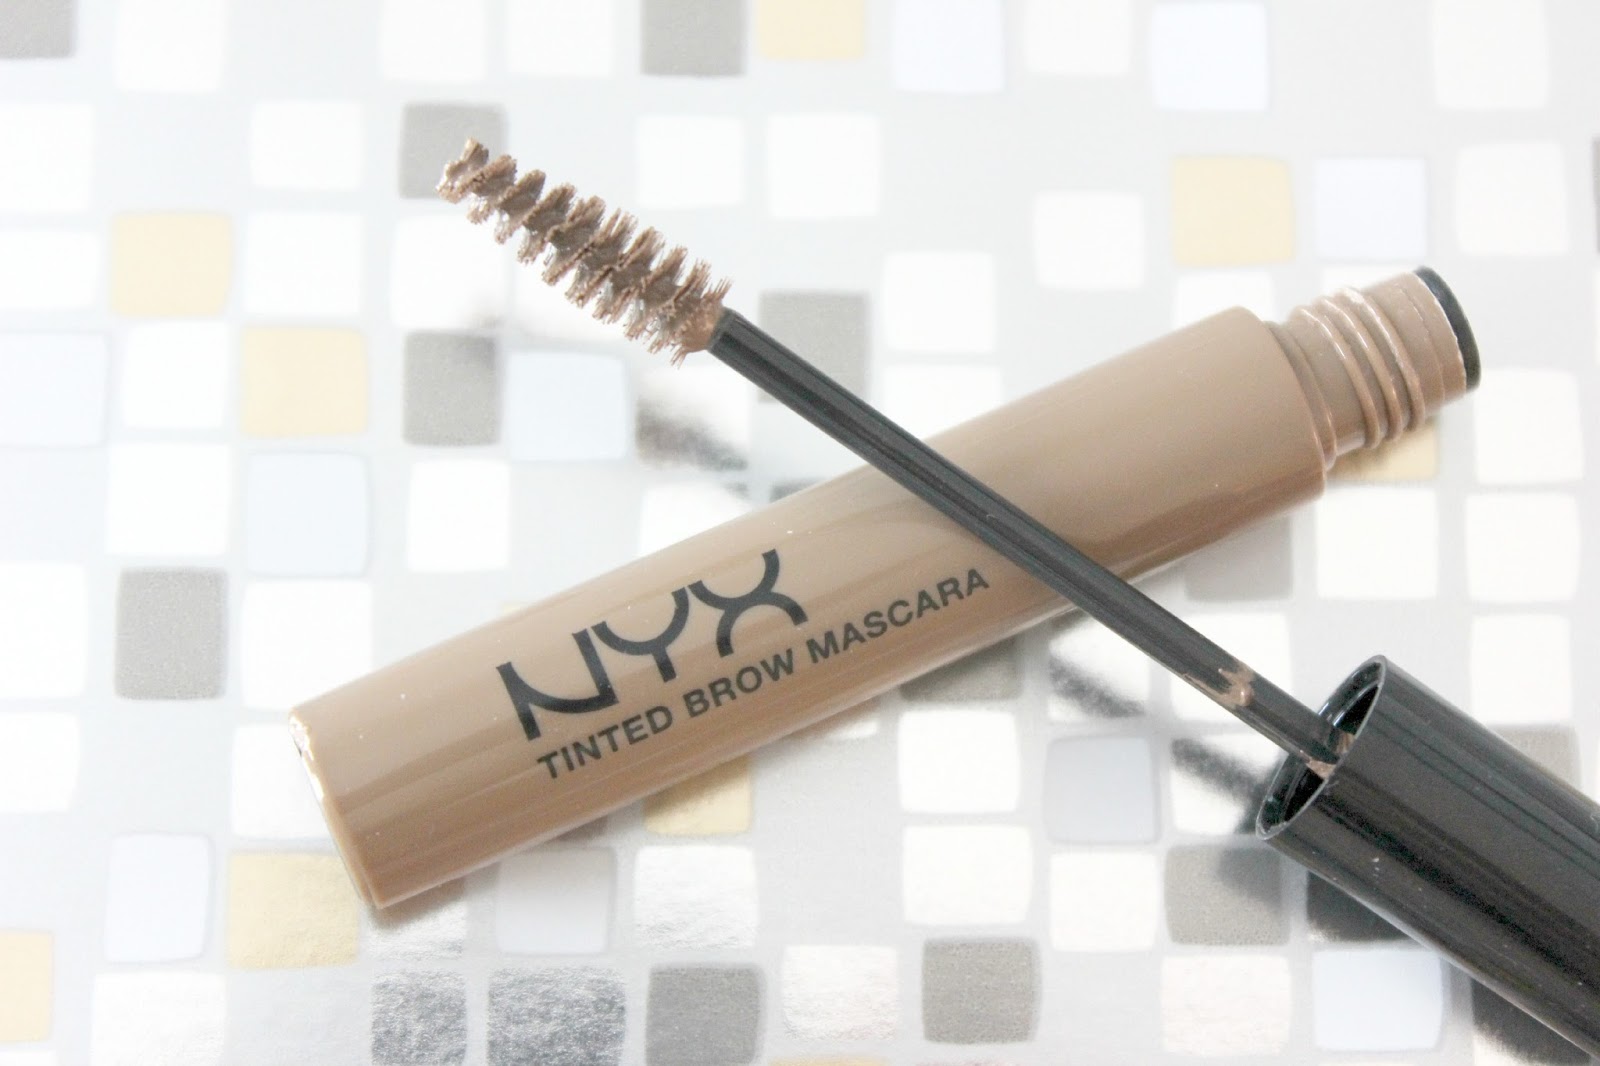 9. NYX Professional Makeup Tinted Brow Mascara - wide 2